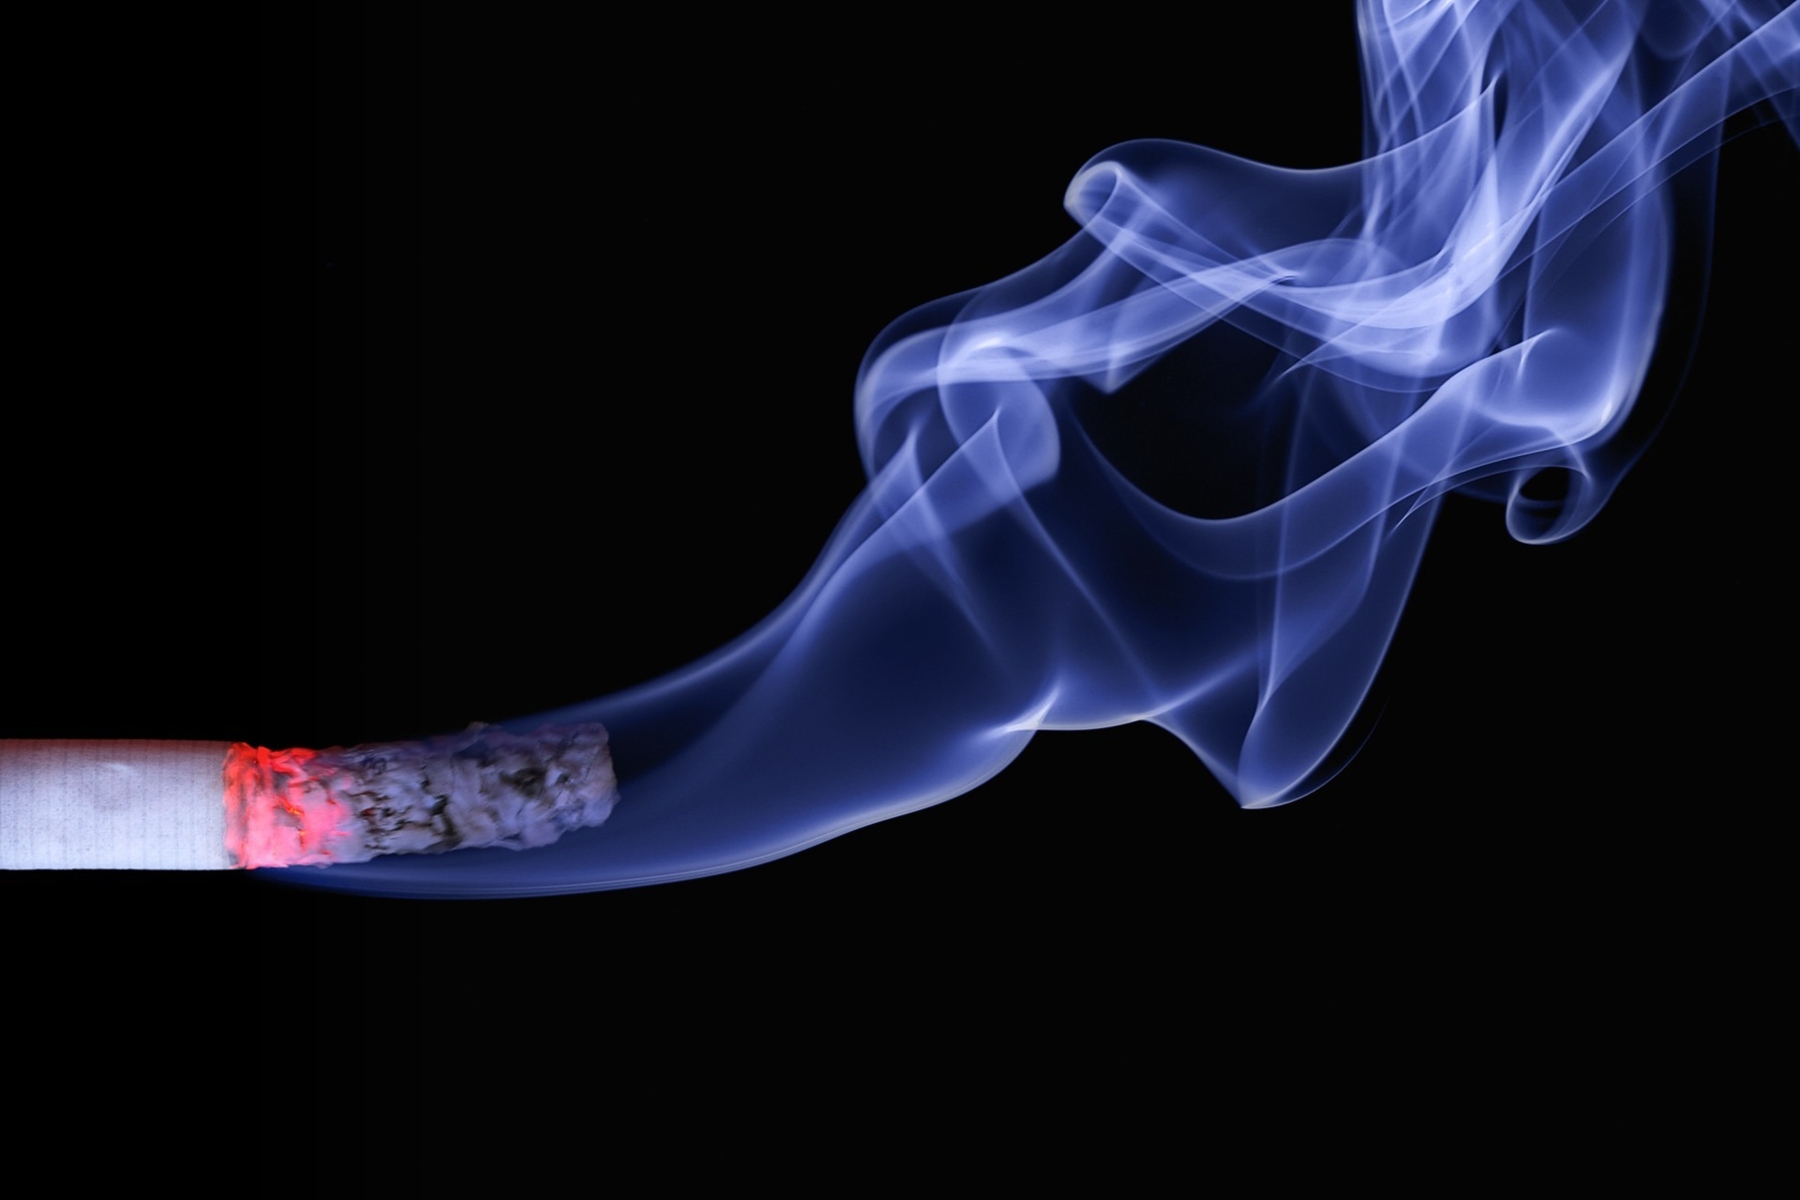 Application κάπνισμα: Πώς να κόψετε το κάπνισμα και με τη βοήθεια της τεχνολογίας;